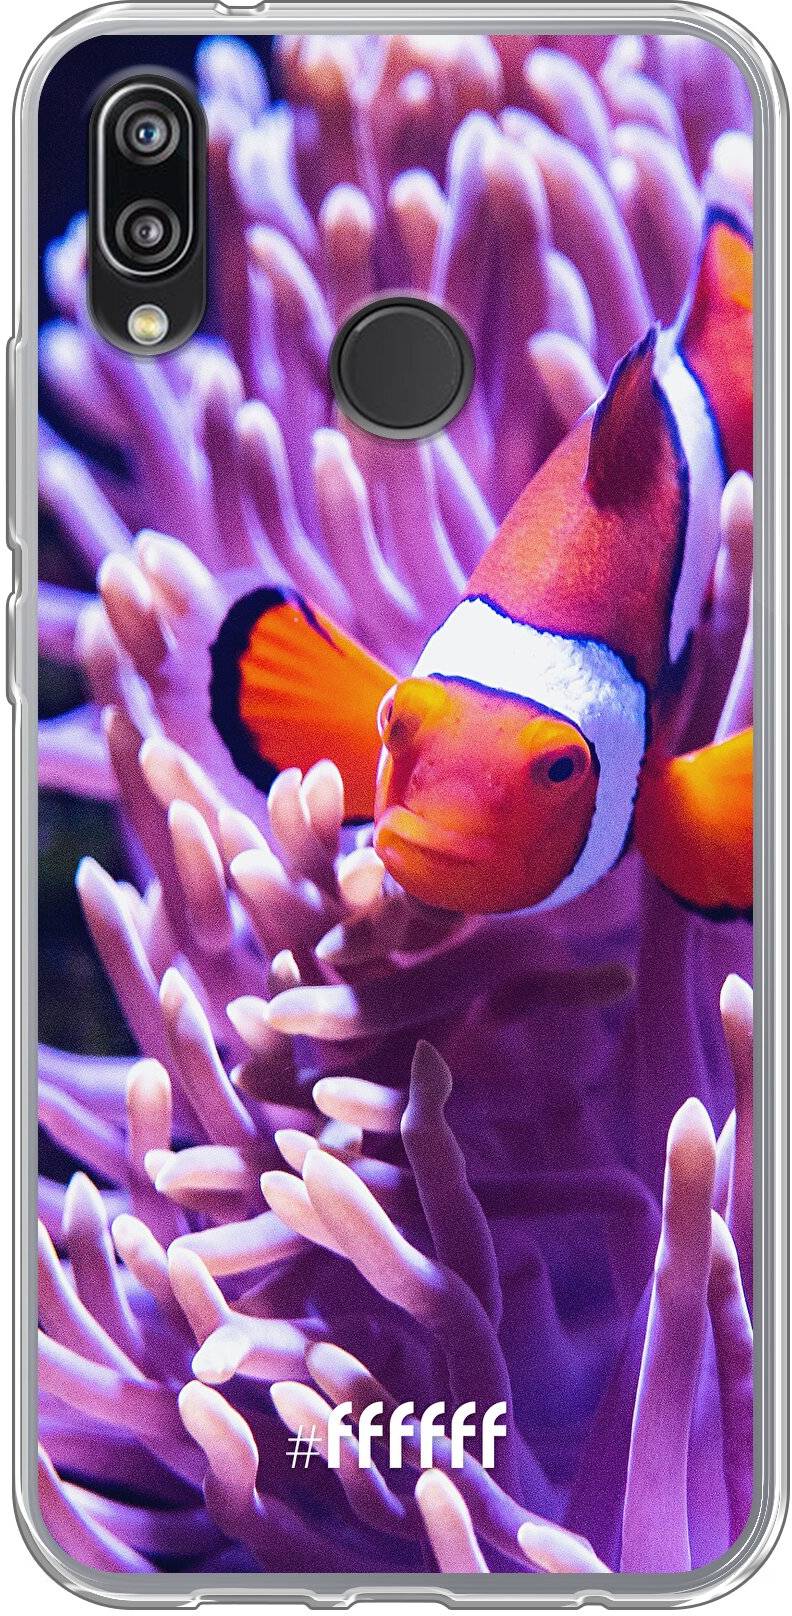 Nemo P20 Lite (2018)